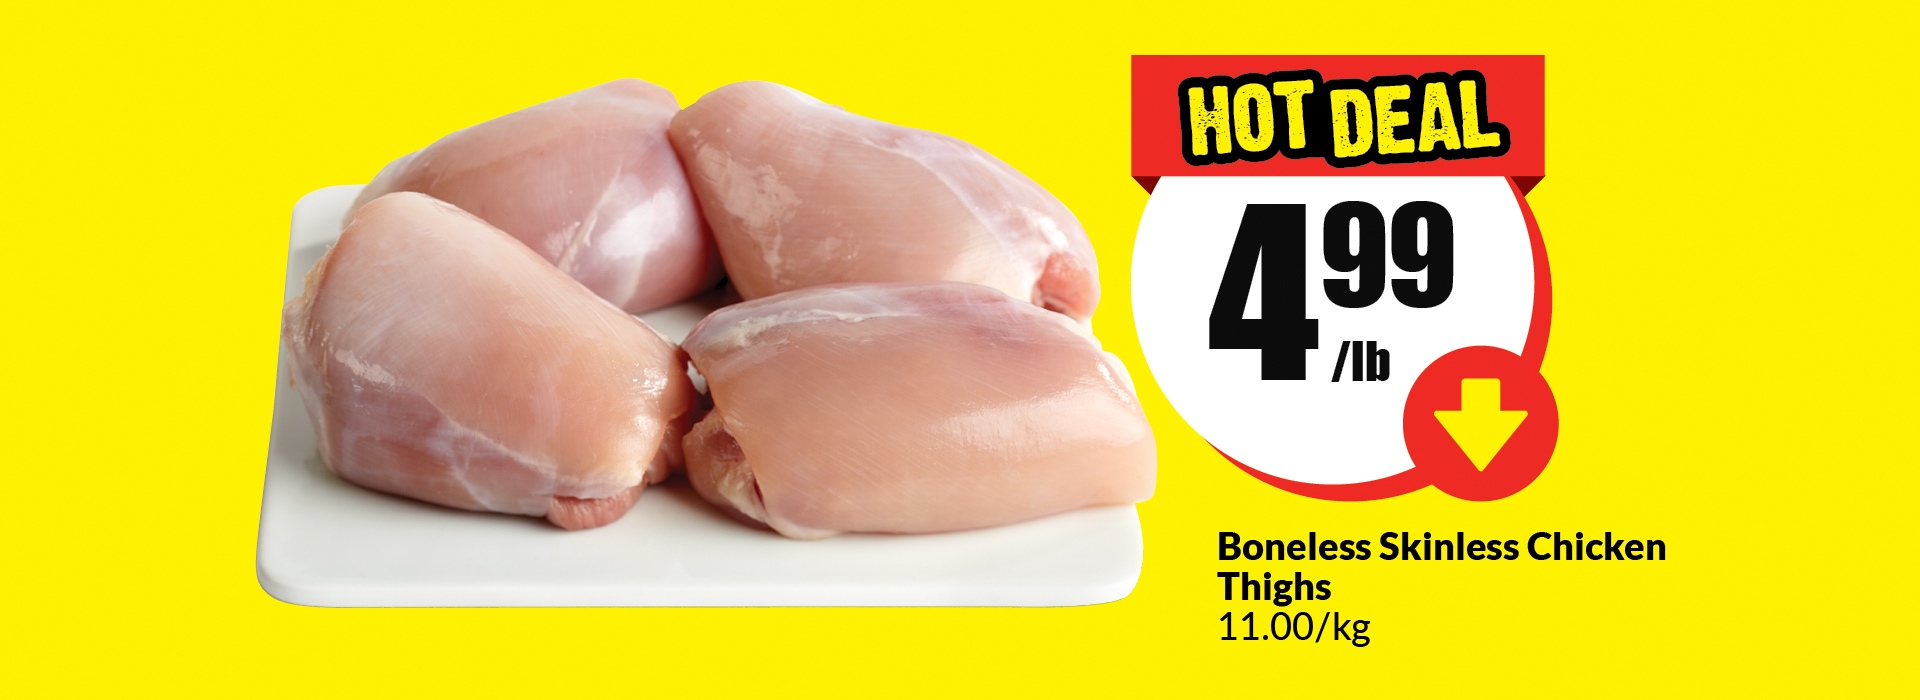 Boneless skinless chicken